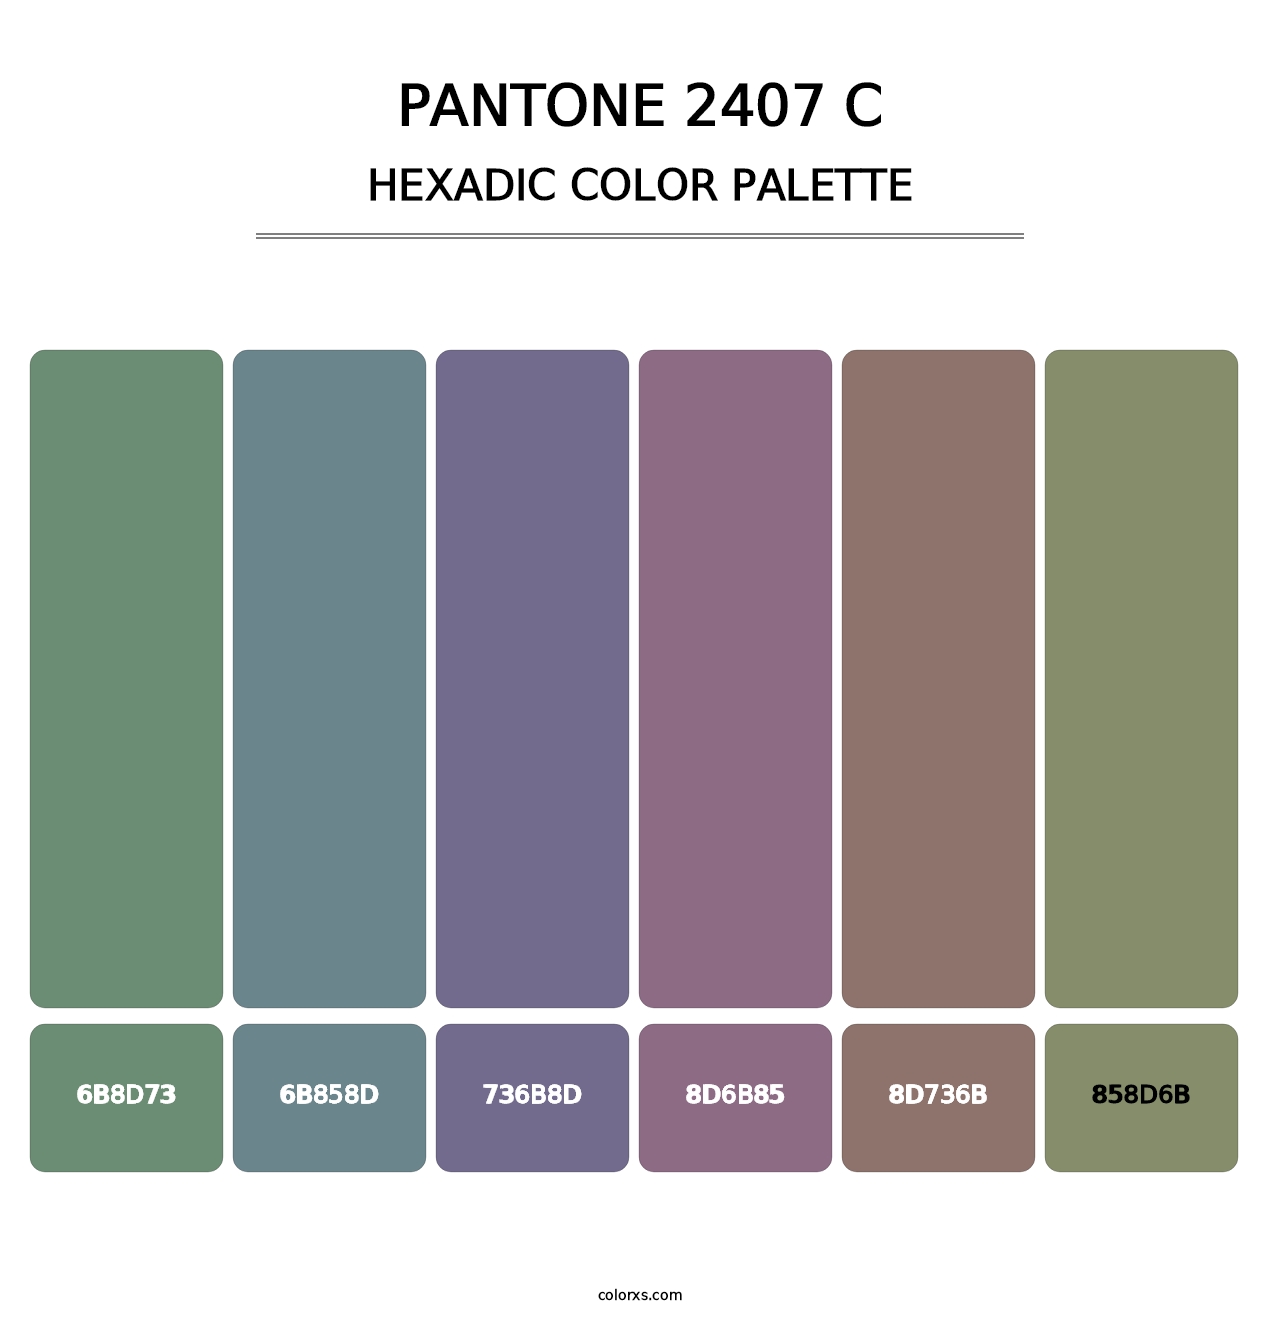 PANTONE 2407 C - Hexadic Color Palette